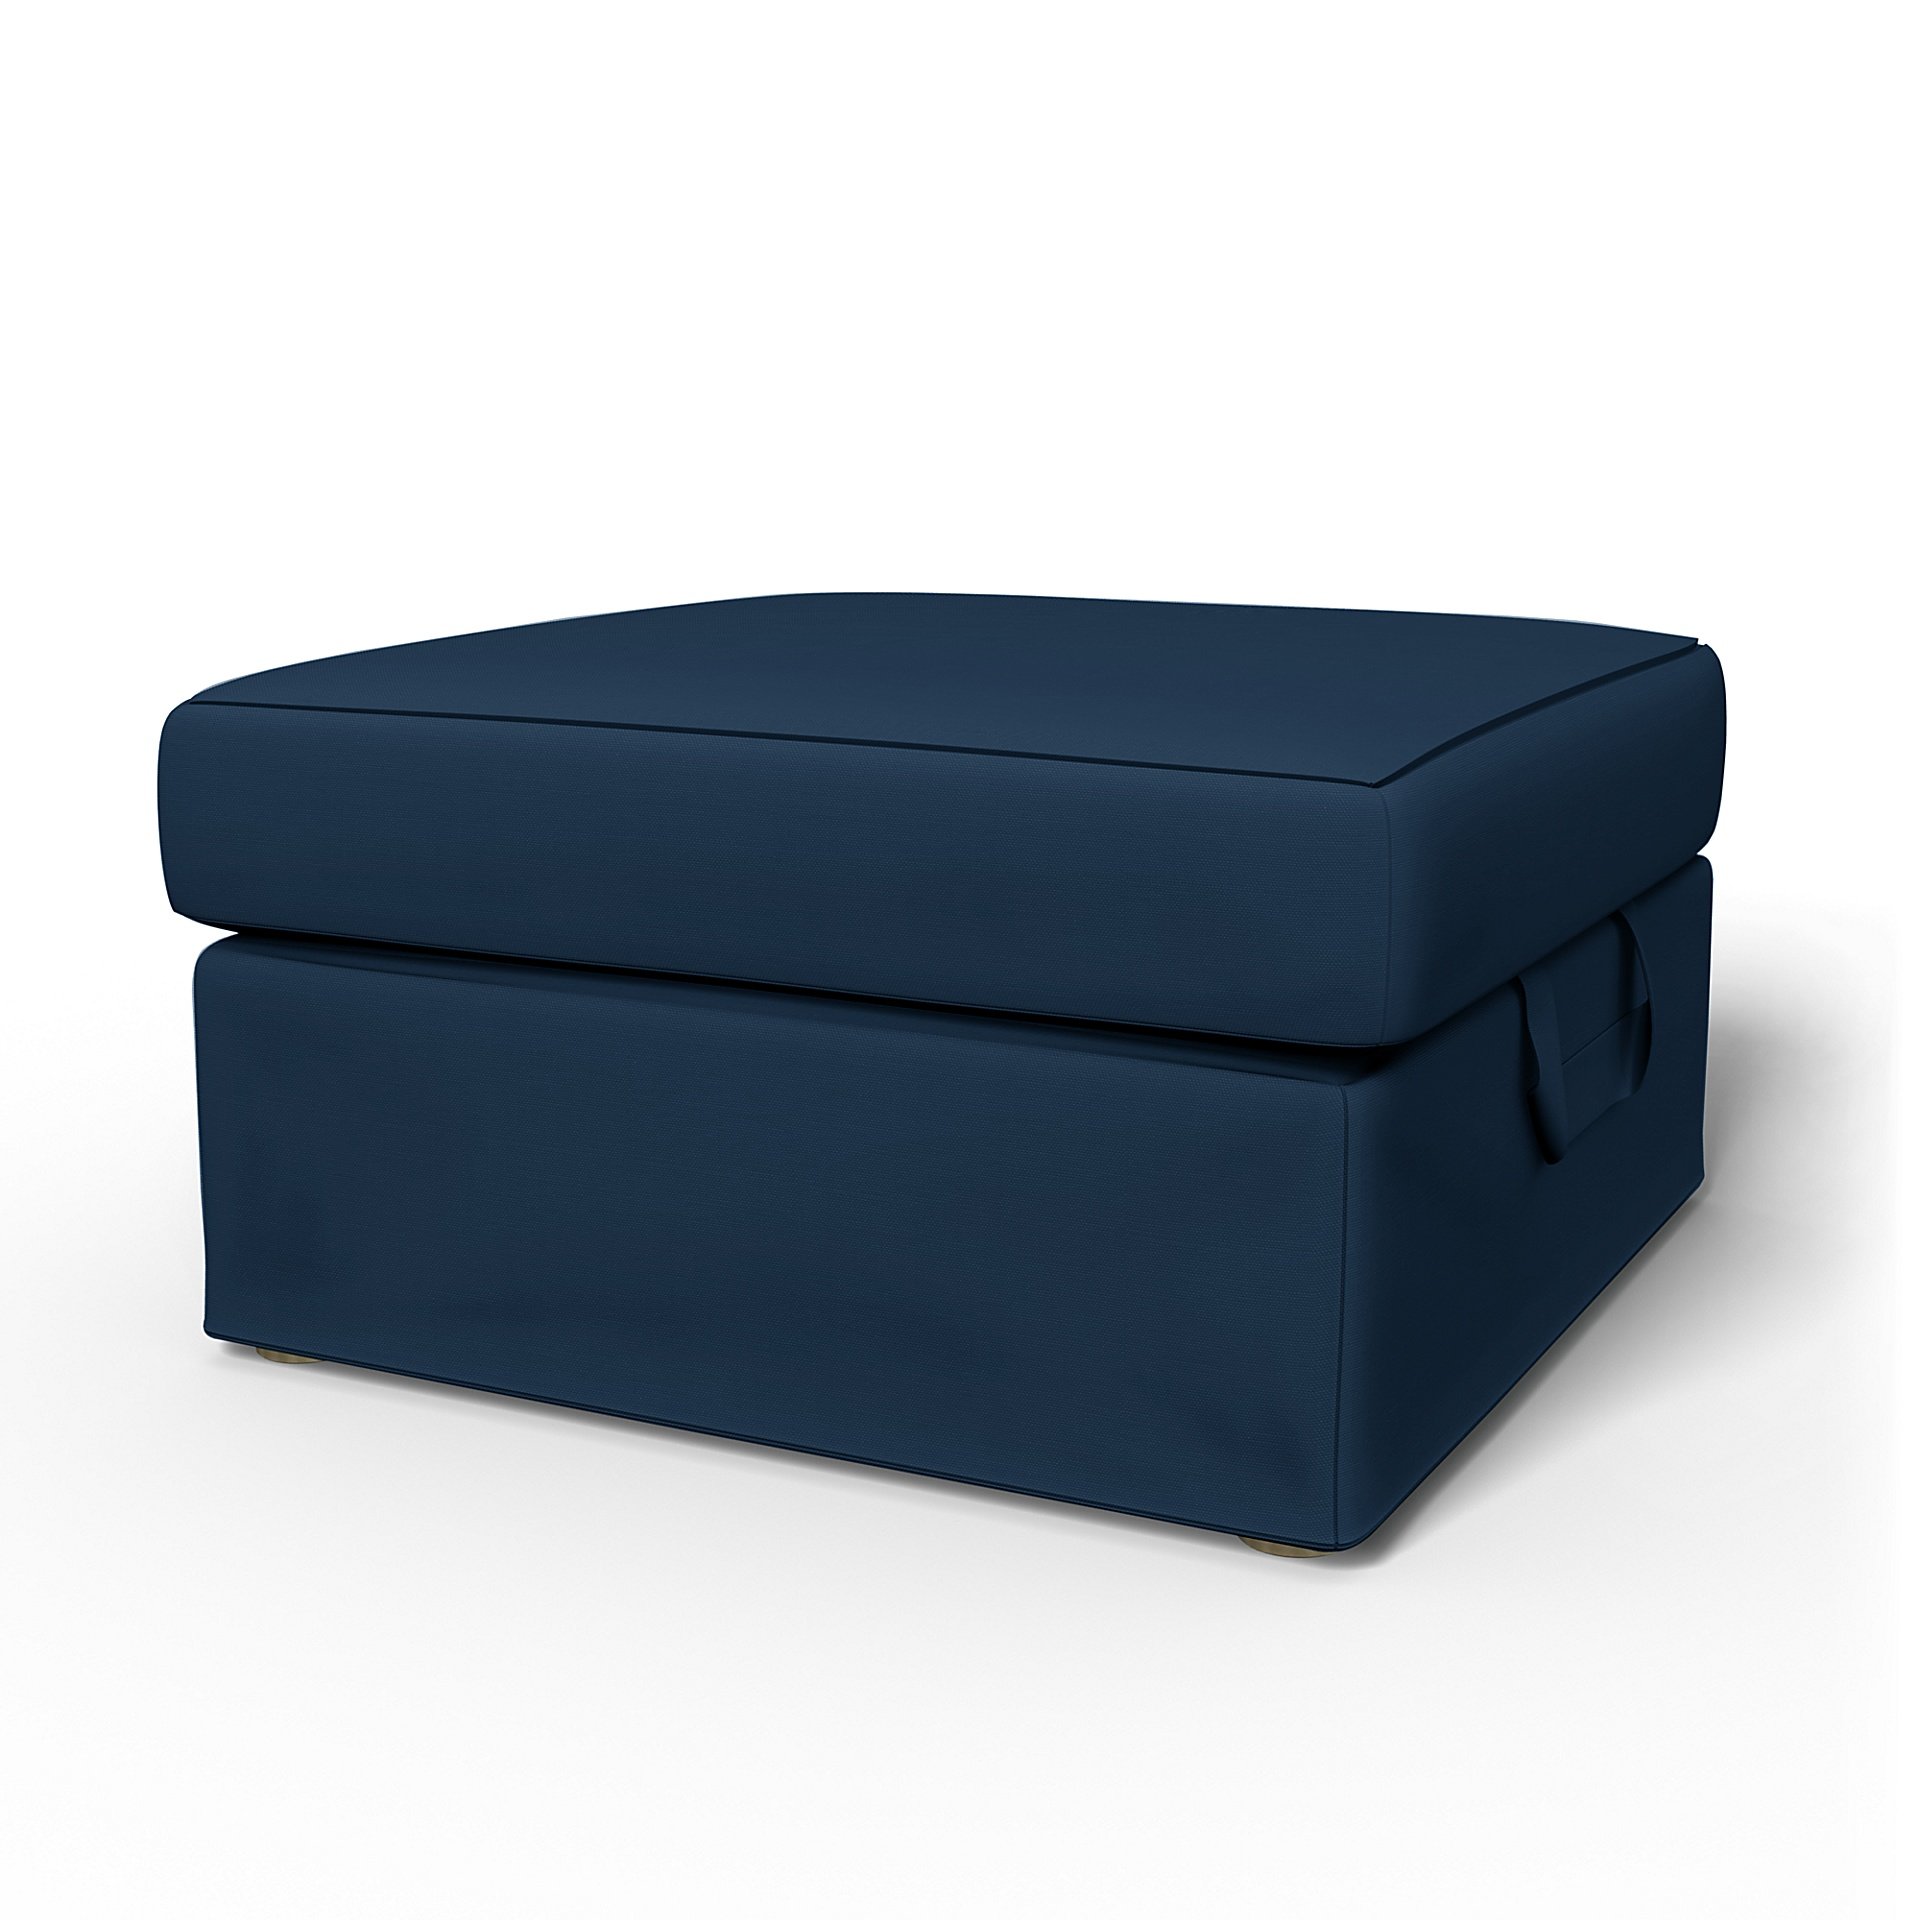 IKEA - Tomelilla Foto Footstool Cover, Deep Navy Blue, Cotton - Bemz